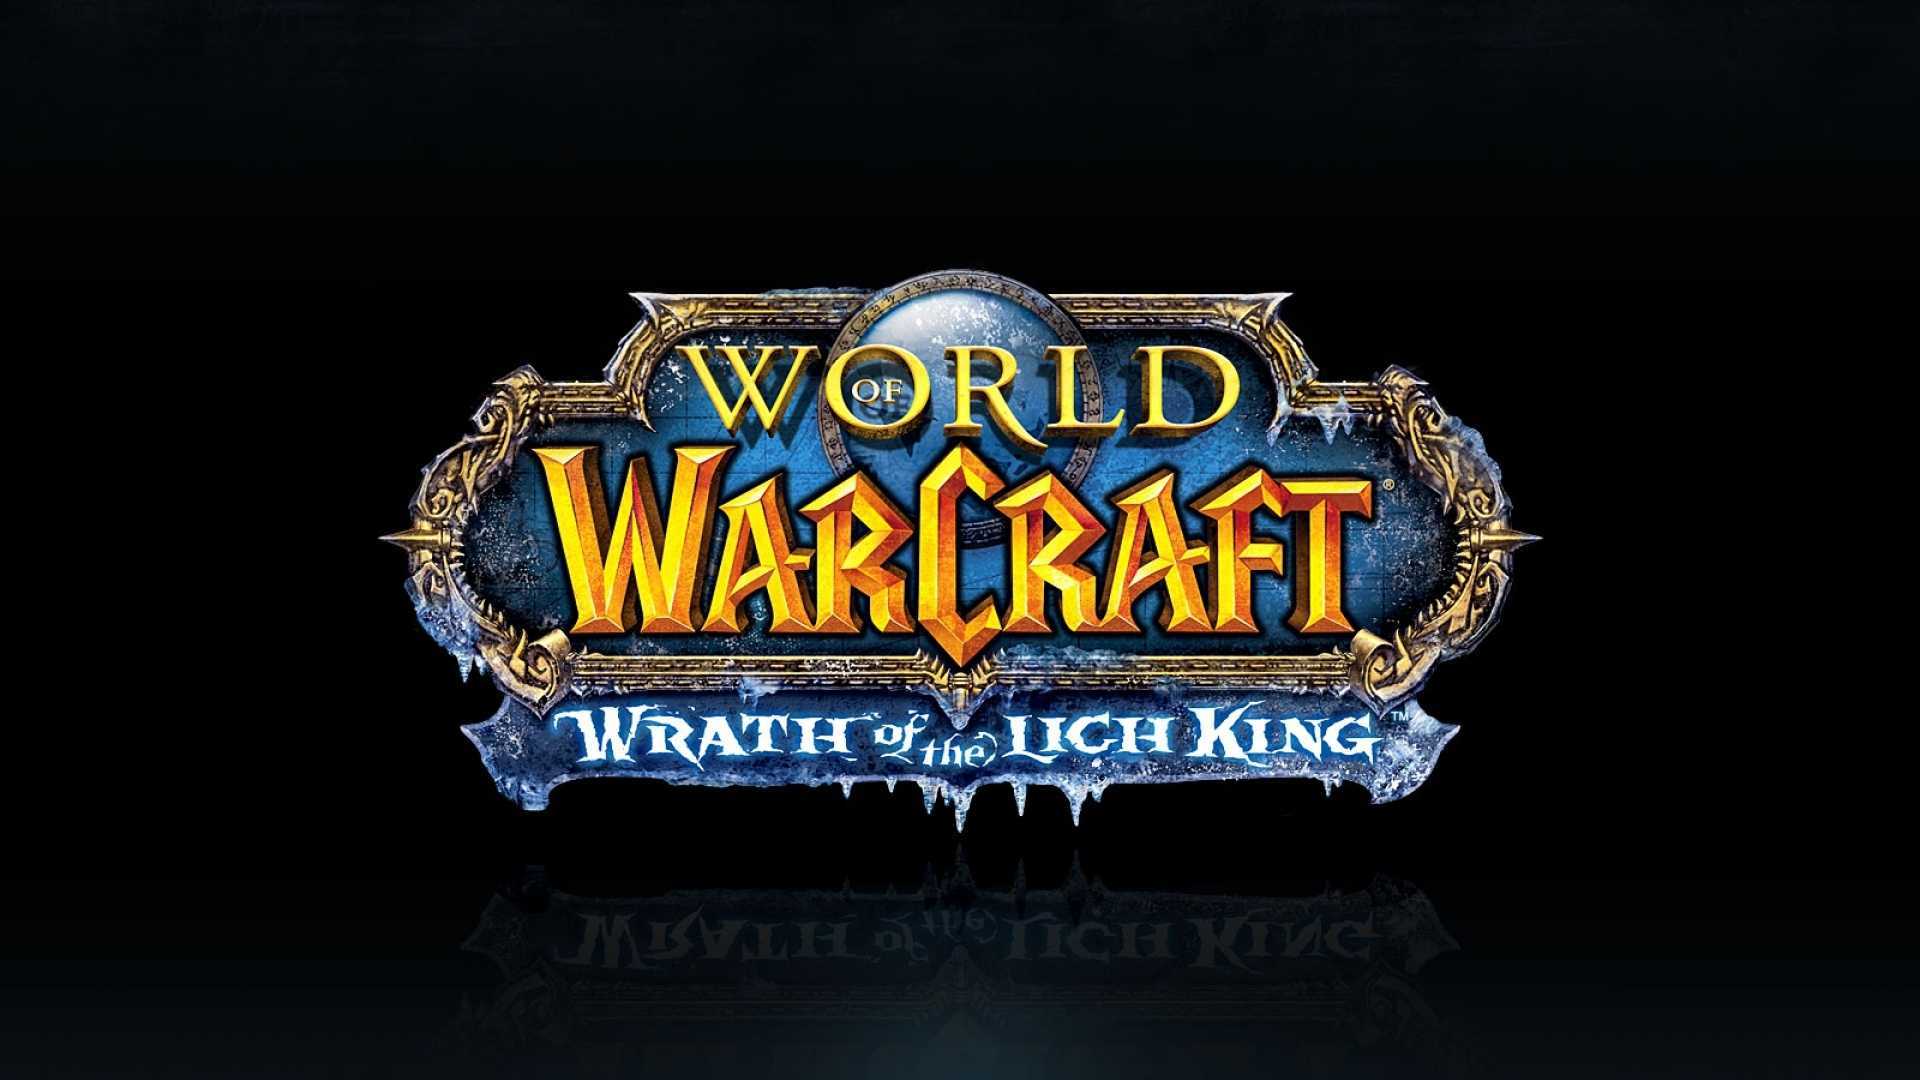 World of warcraft: wrath of the lich king classic — полное руководство по кузнечному делу